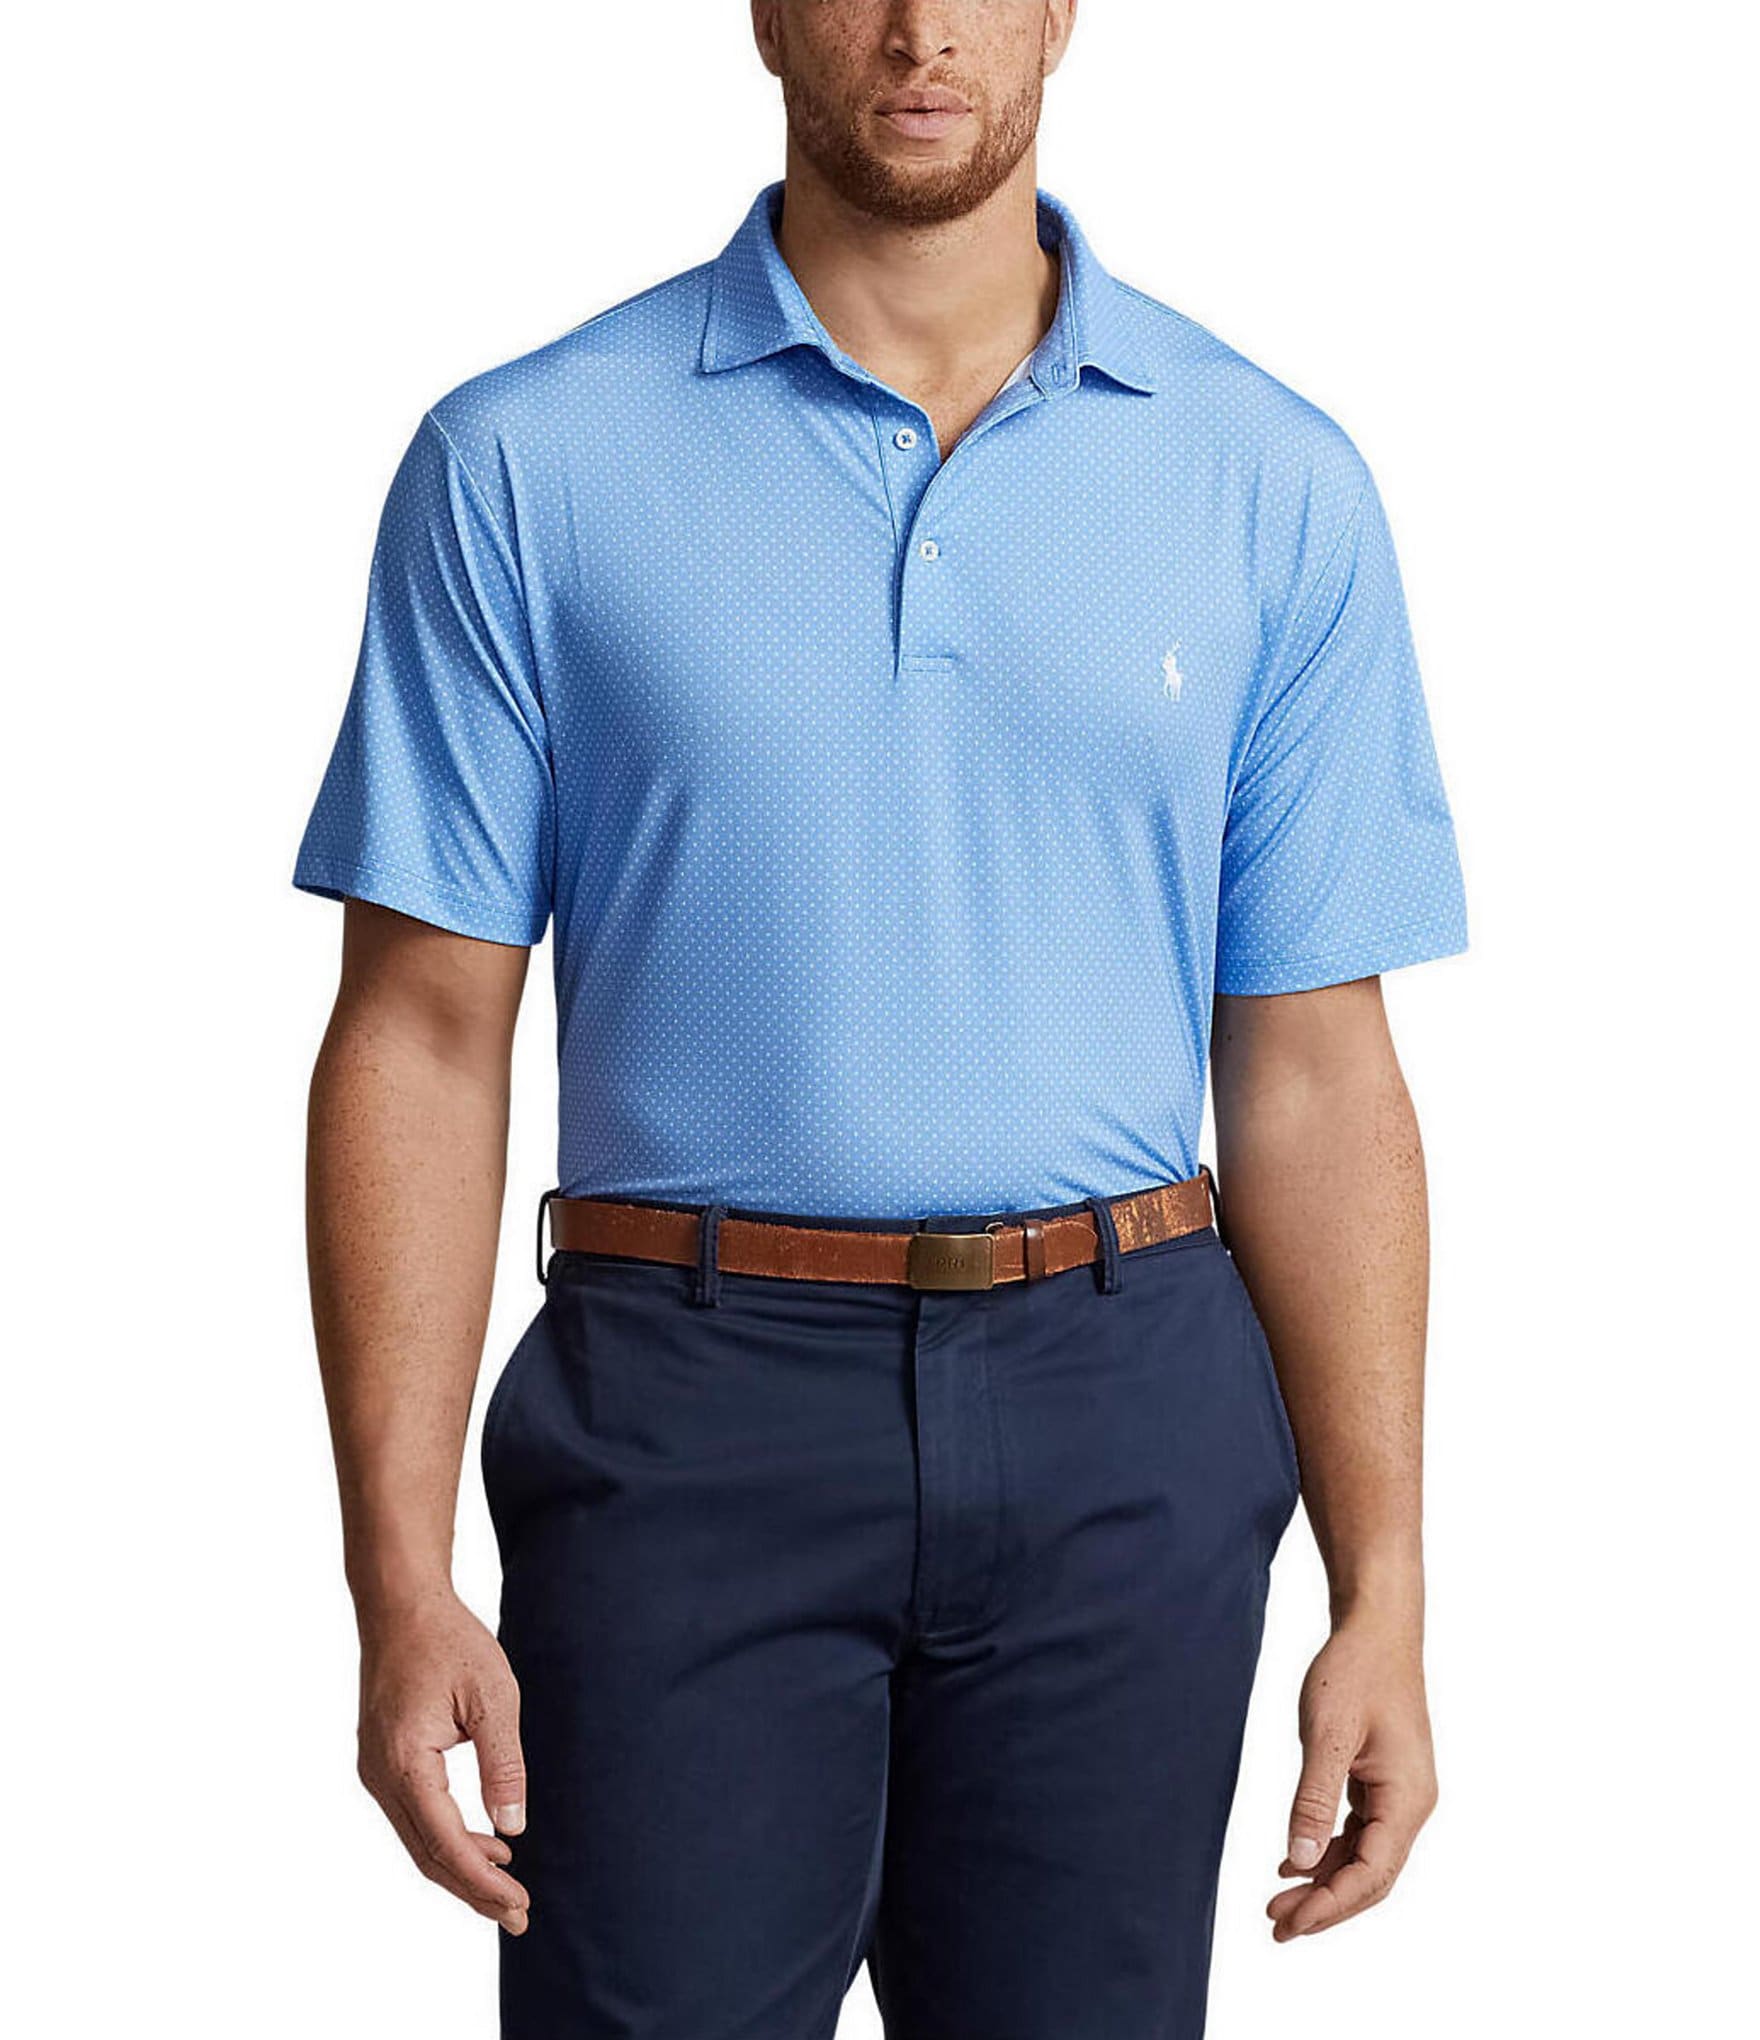 Big + Tall, Polo Ralph Lauren Soft Touch Polo Shirt